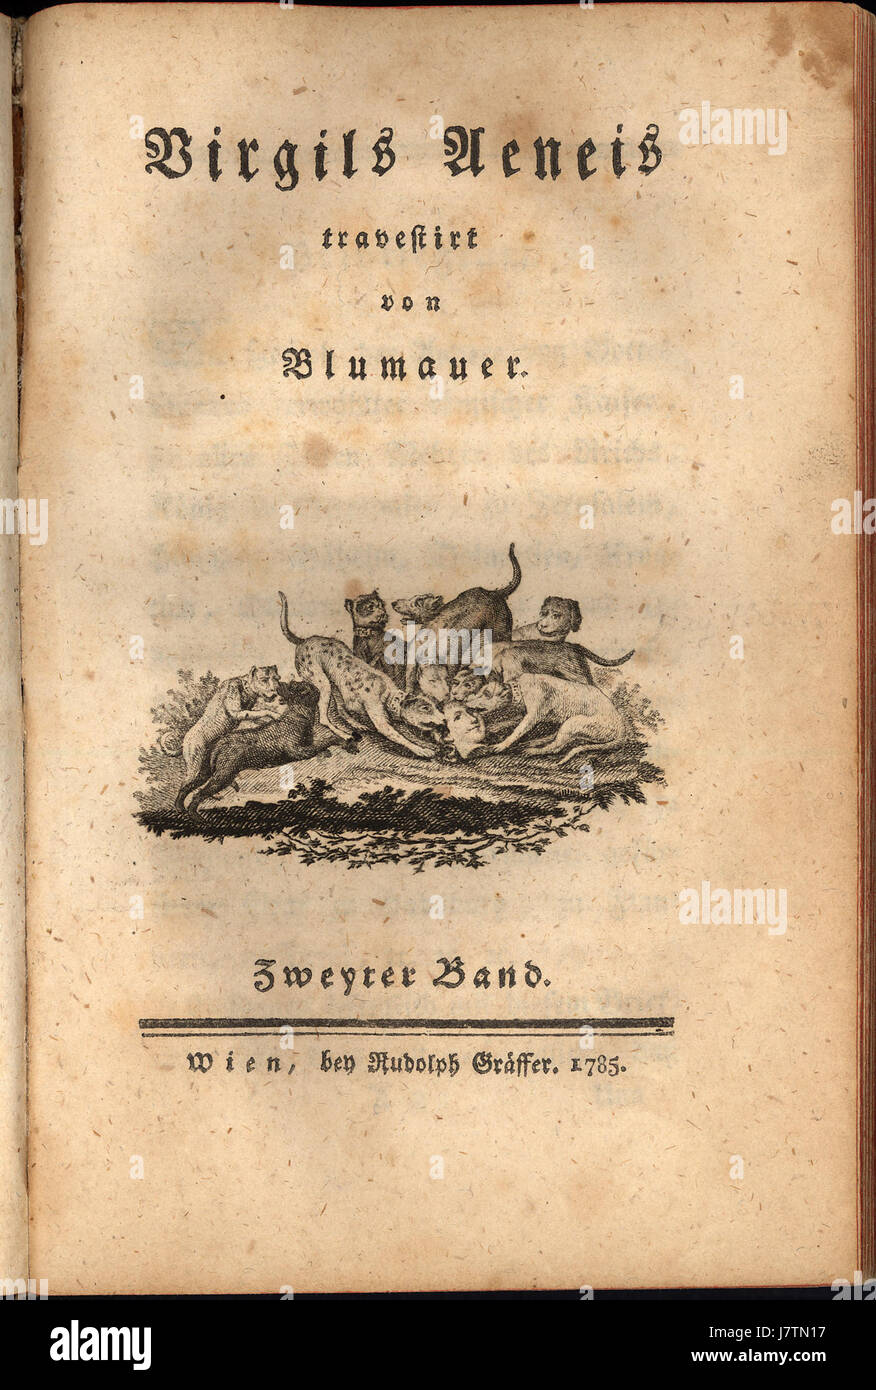 Blumauer, Virgils Aeneis Travestiert, Vol. 2 (Wien 1785), Titelseite Stockfoto